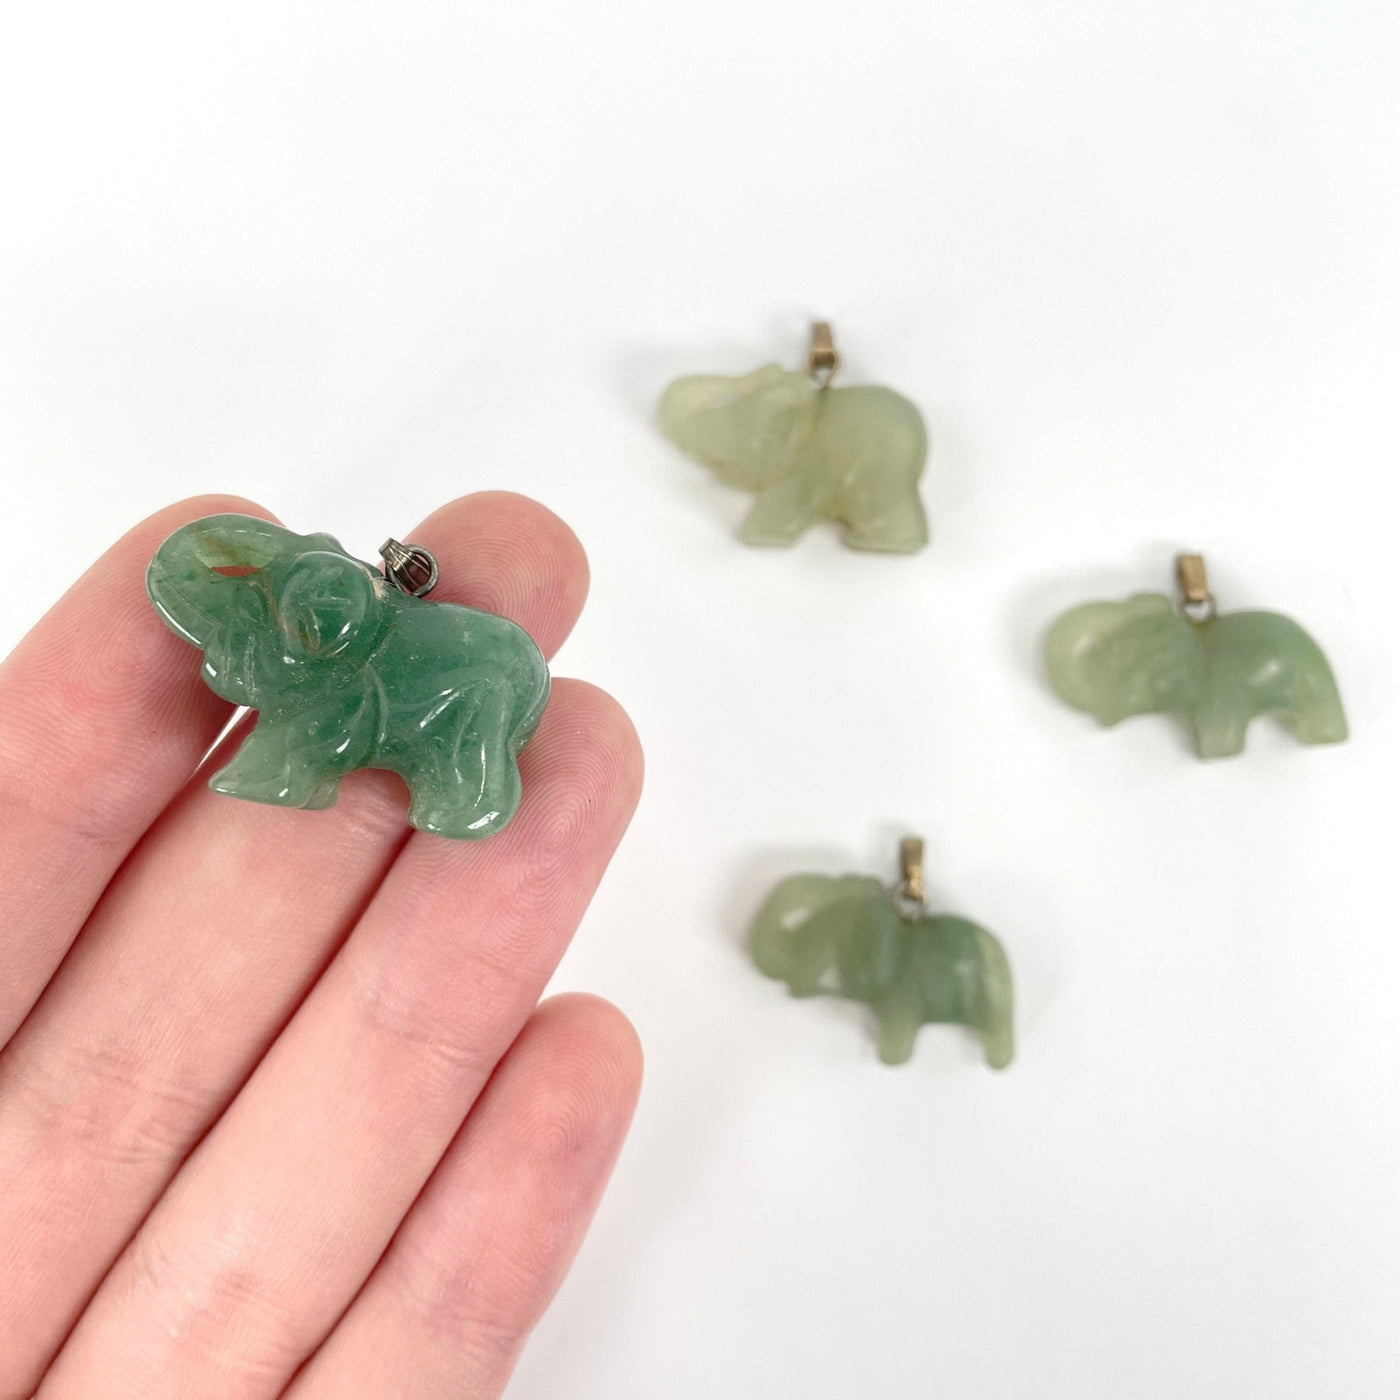 green quartz elephant pendants in hand and on display